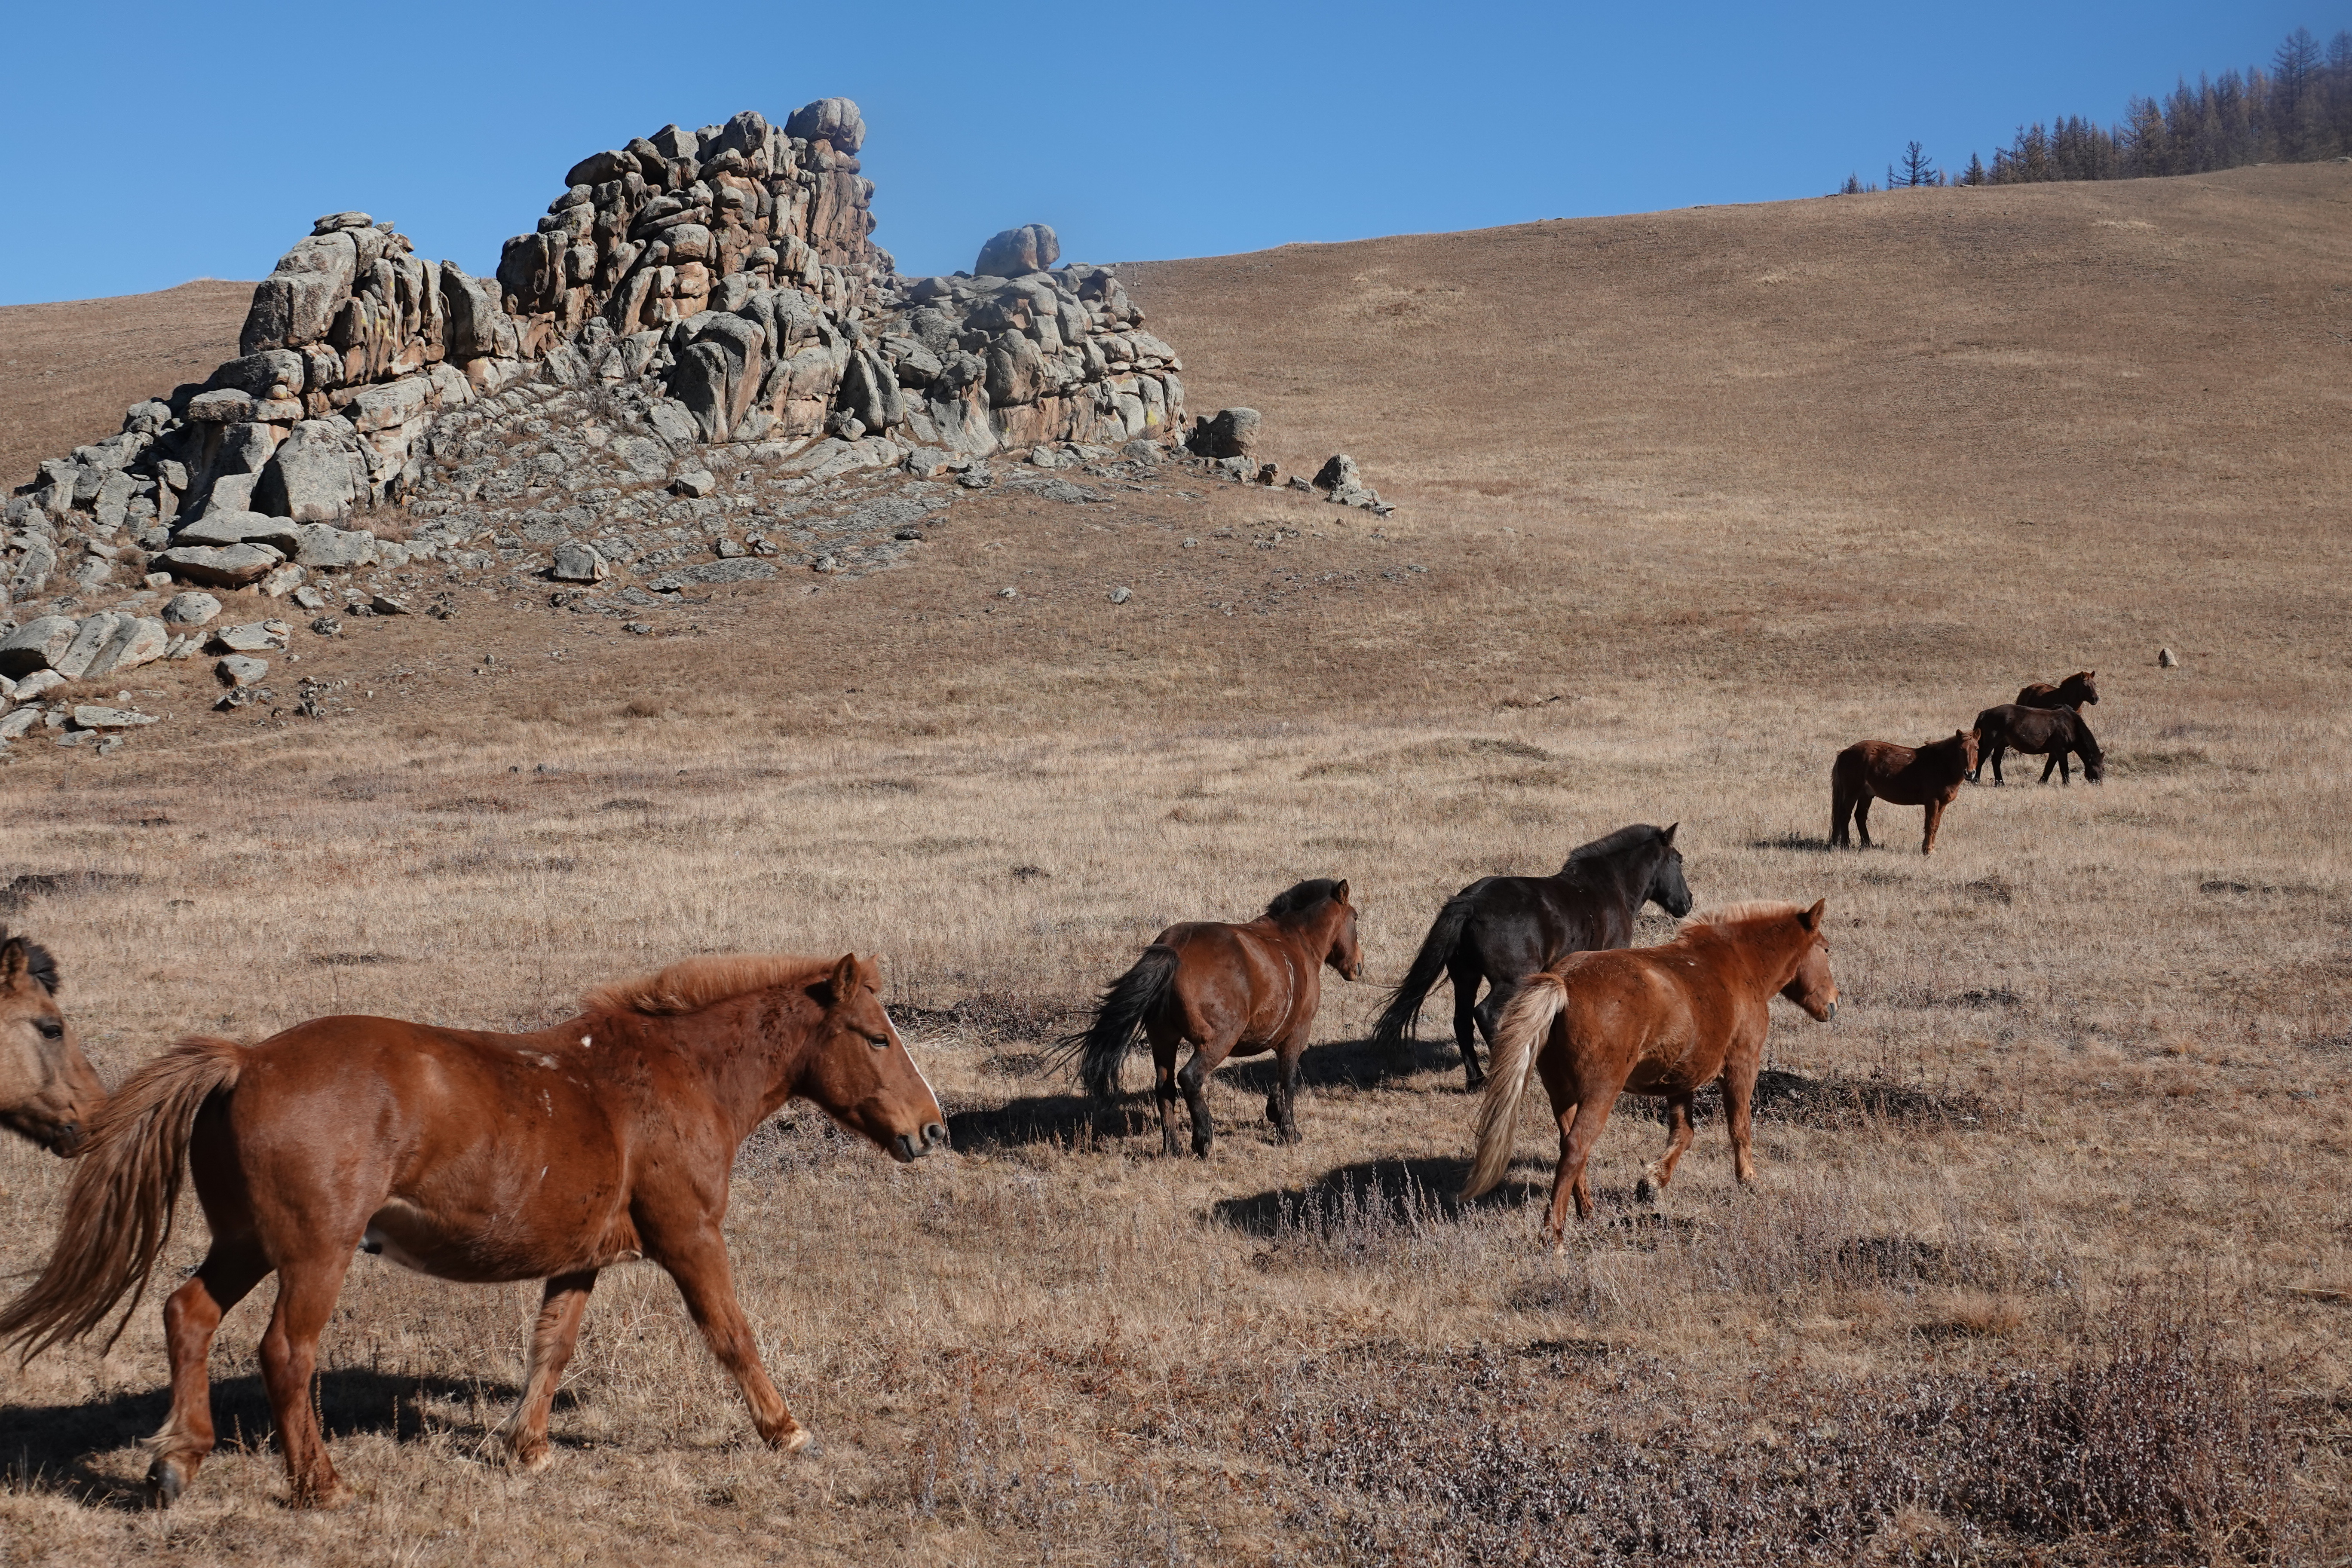 Horses, the Dawn of Arts and Forgotten Dreams